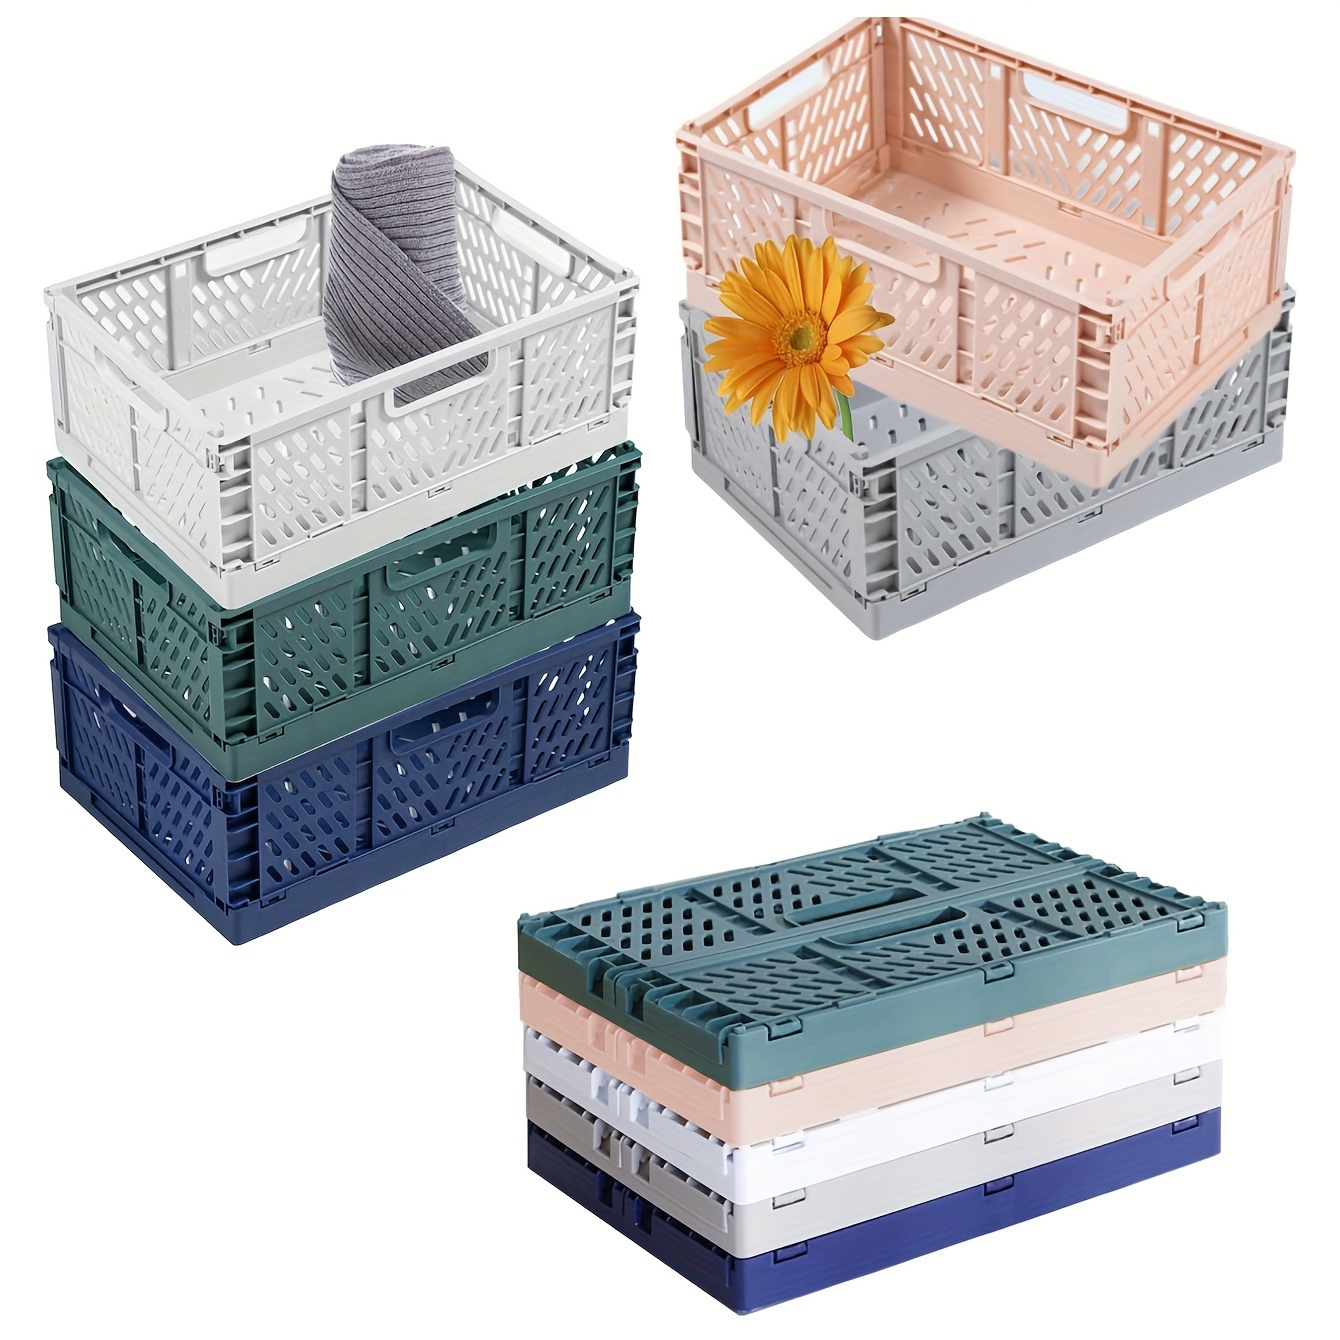 2 Pcs Plastic simple Organizer Storage Baskets with Handles Shower